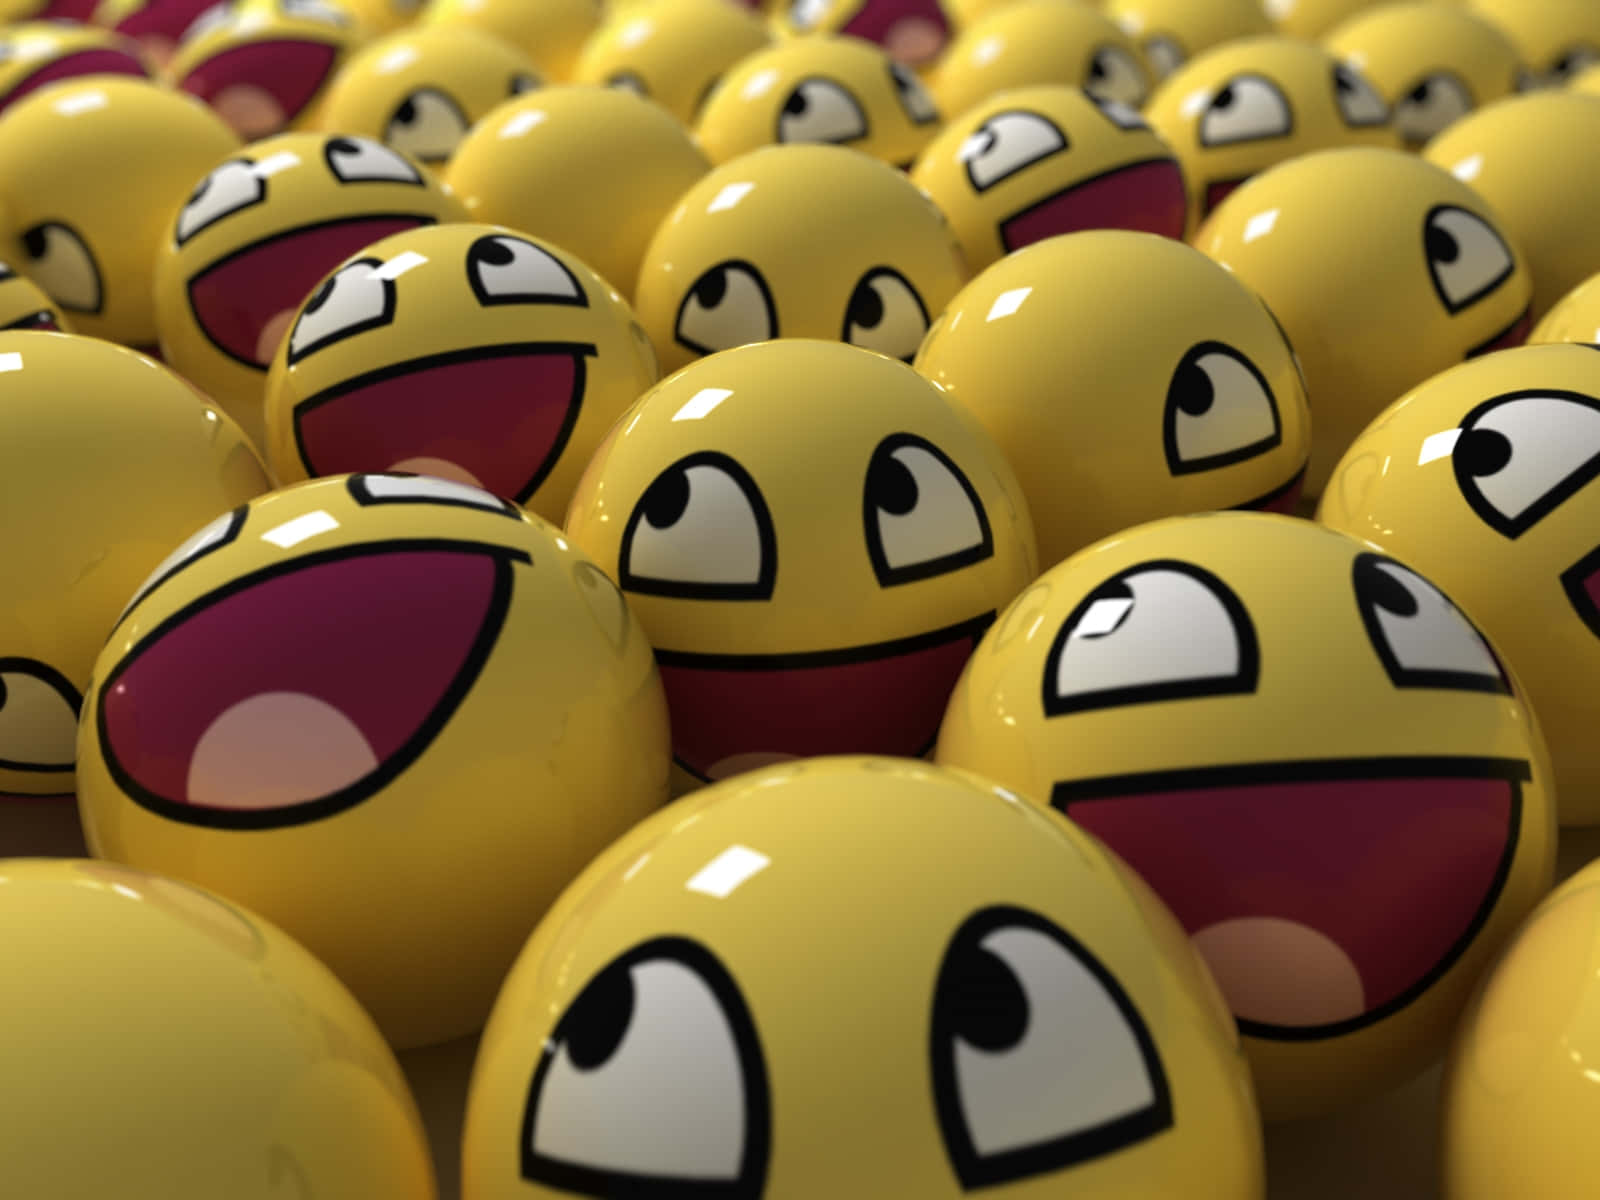 Adorable Happy Smile Balls Wallpaper